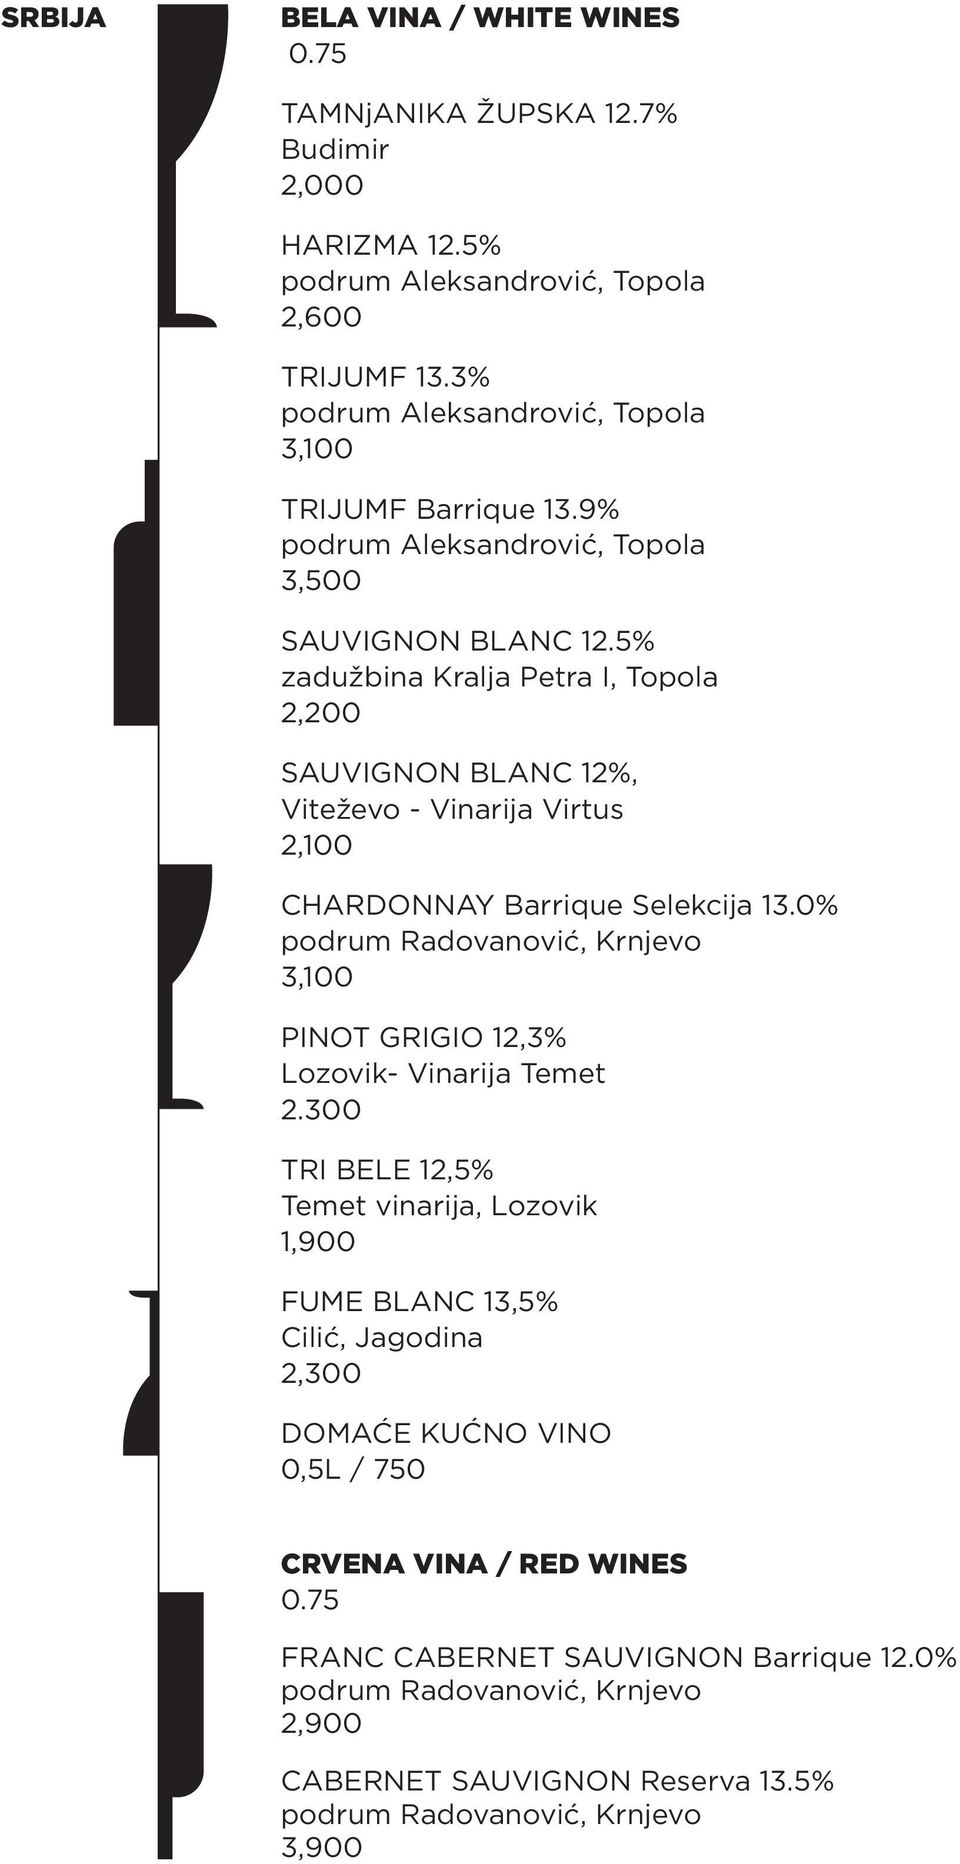 5% zadužbina Kralja Petra I, Topola 2,200 Sauvignon blanc 12%, Viteževo - Vinarija Virtus 2,100 CHARDONNAY Barrique Selekcija 13.